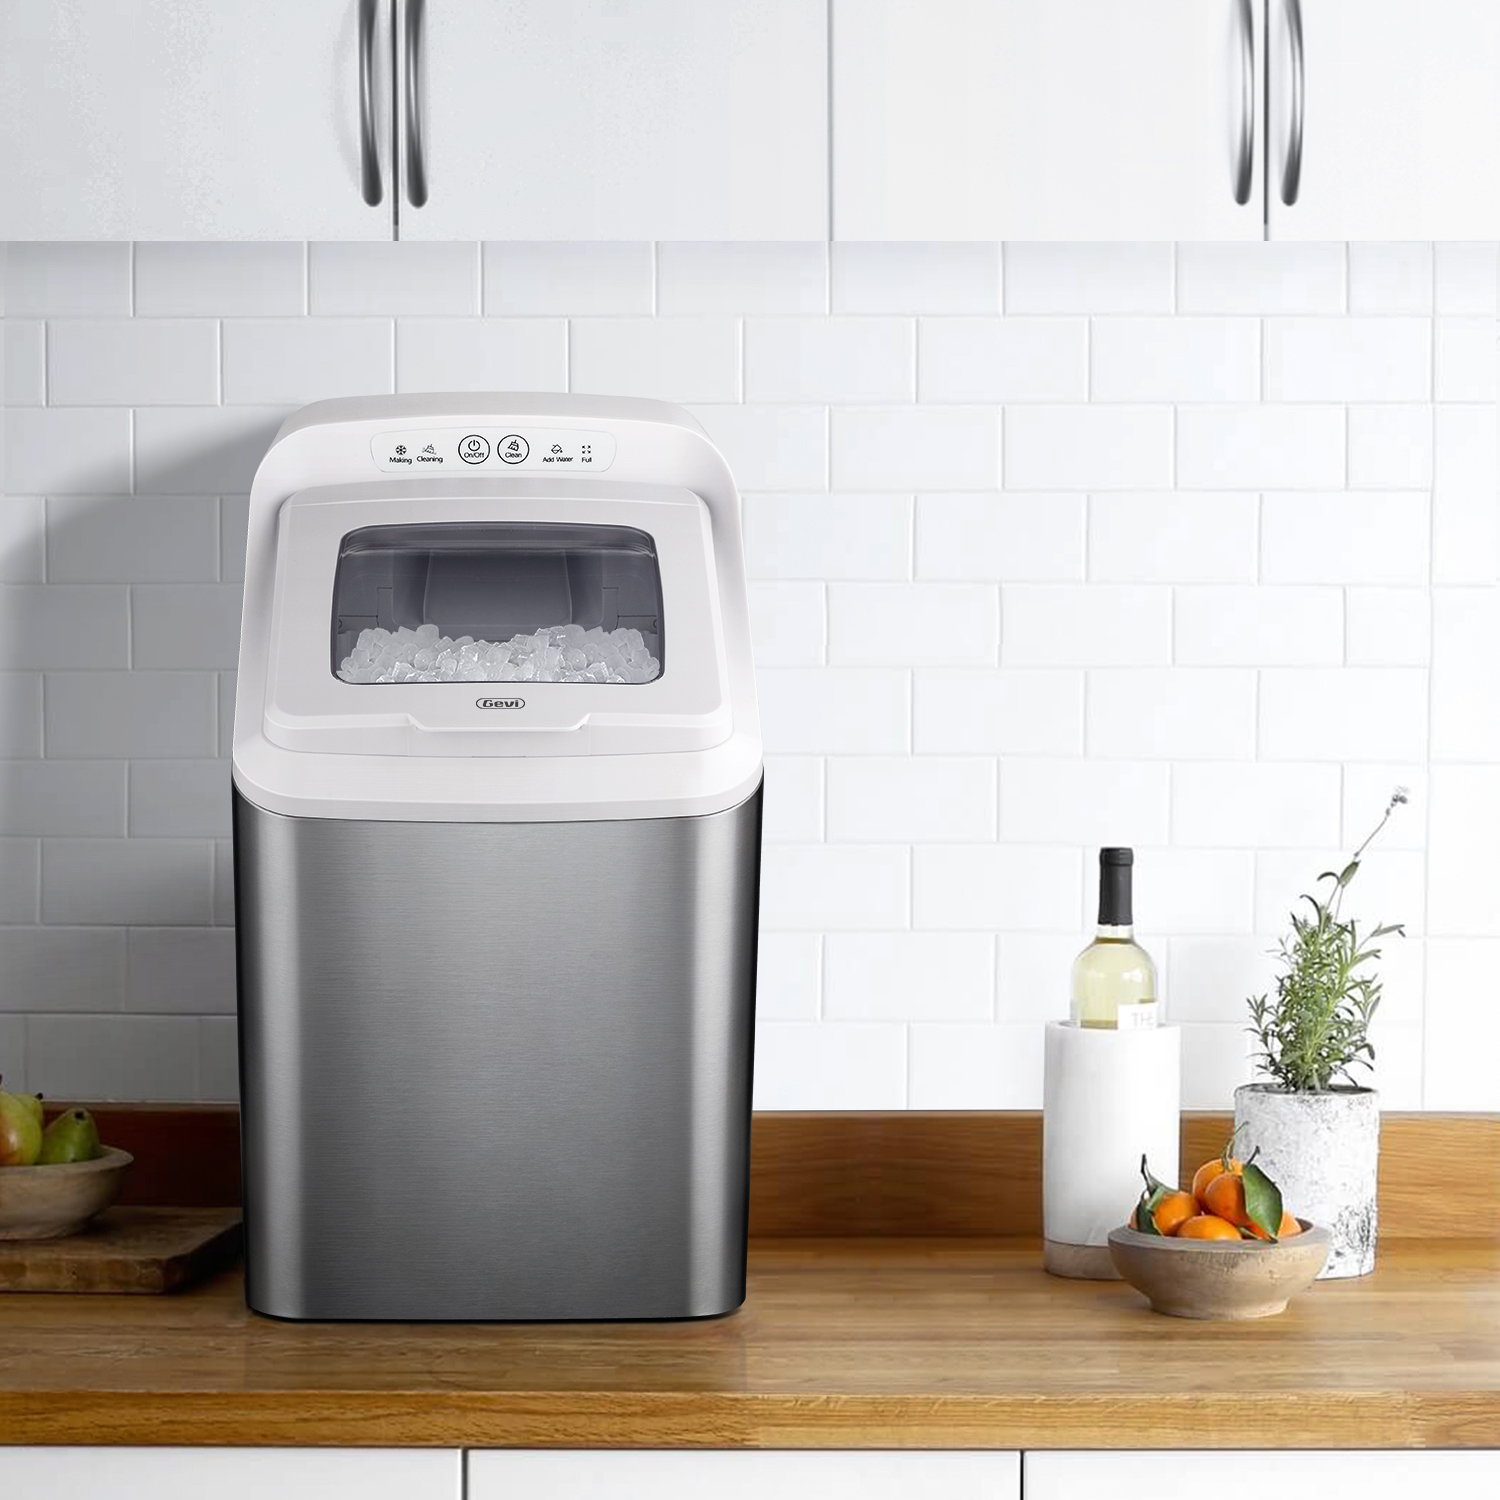  Gevi Household Countertop Ice Maker : Appliances